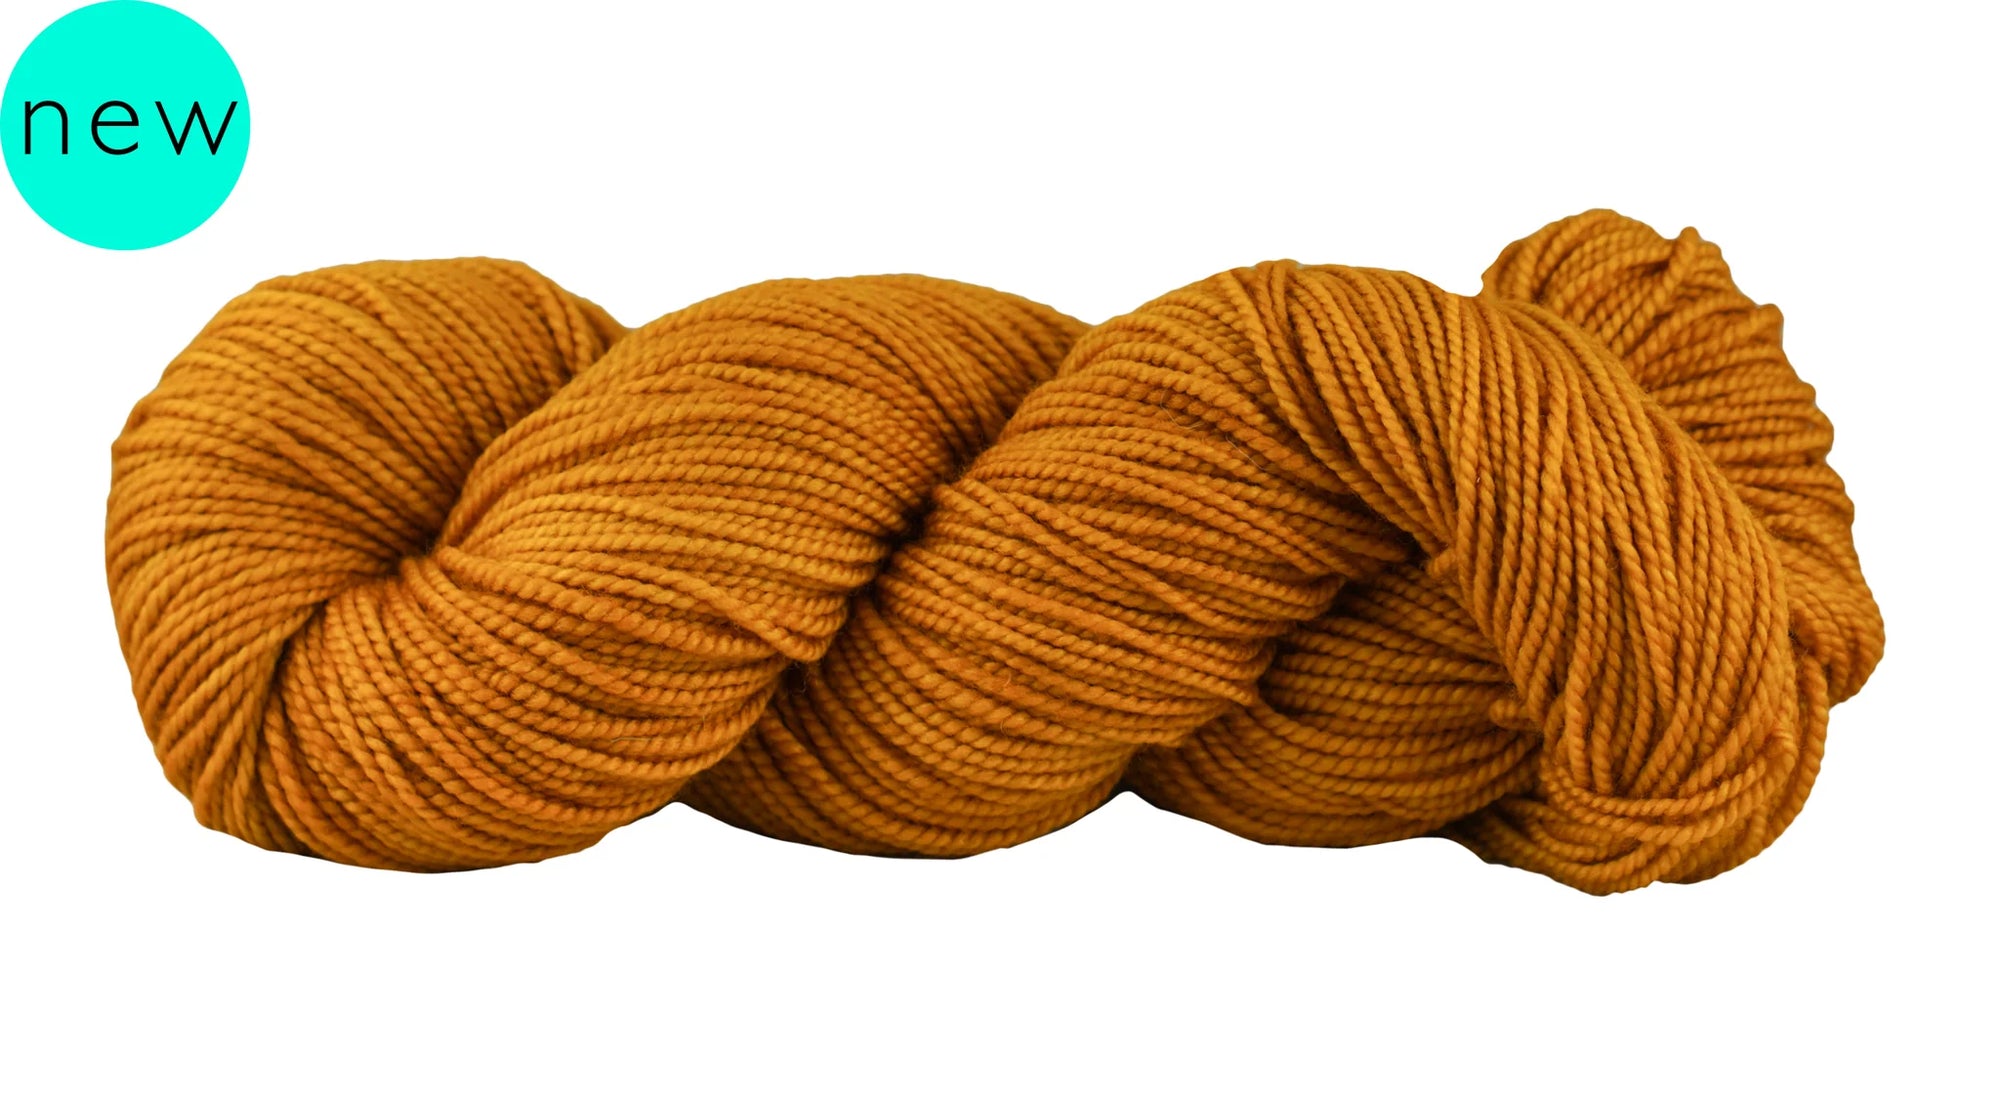 1PCS 100% Merino Wool Yarn for Crocheting,4-Ply Yarn for Knitting,Crochet  Yarn Knitting Yarn for Sweater,Scarf，Hat,Socks,Blankets(Light Grey)